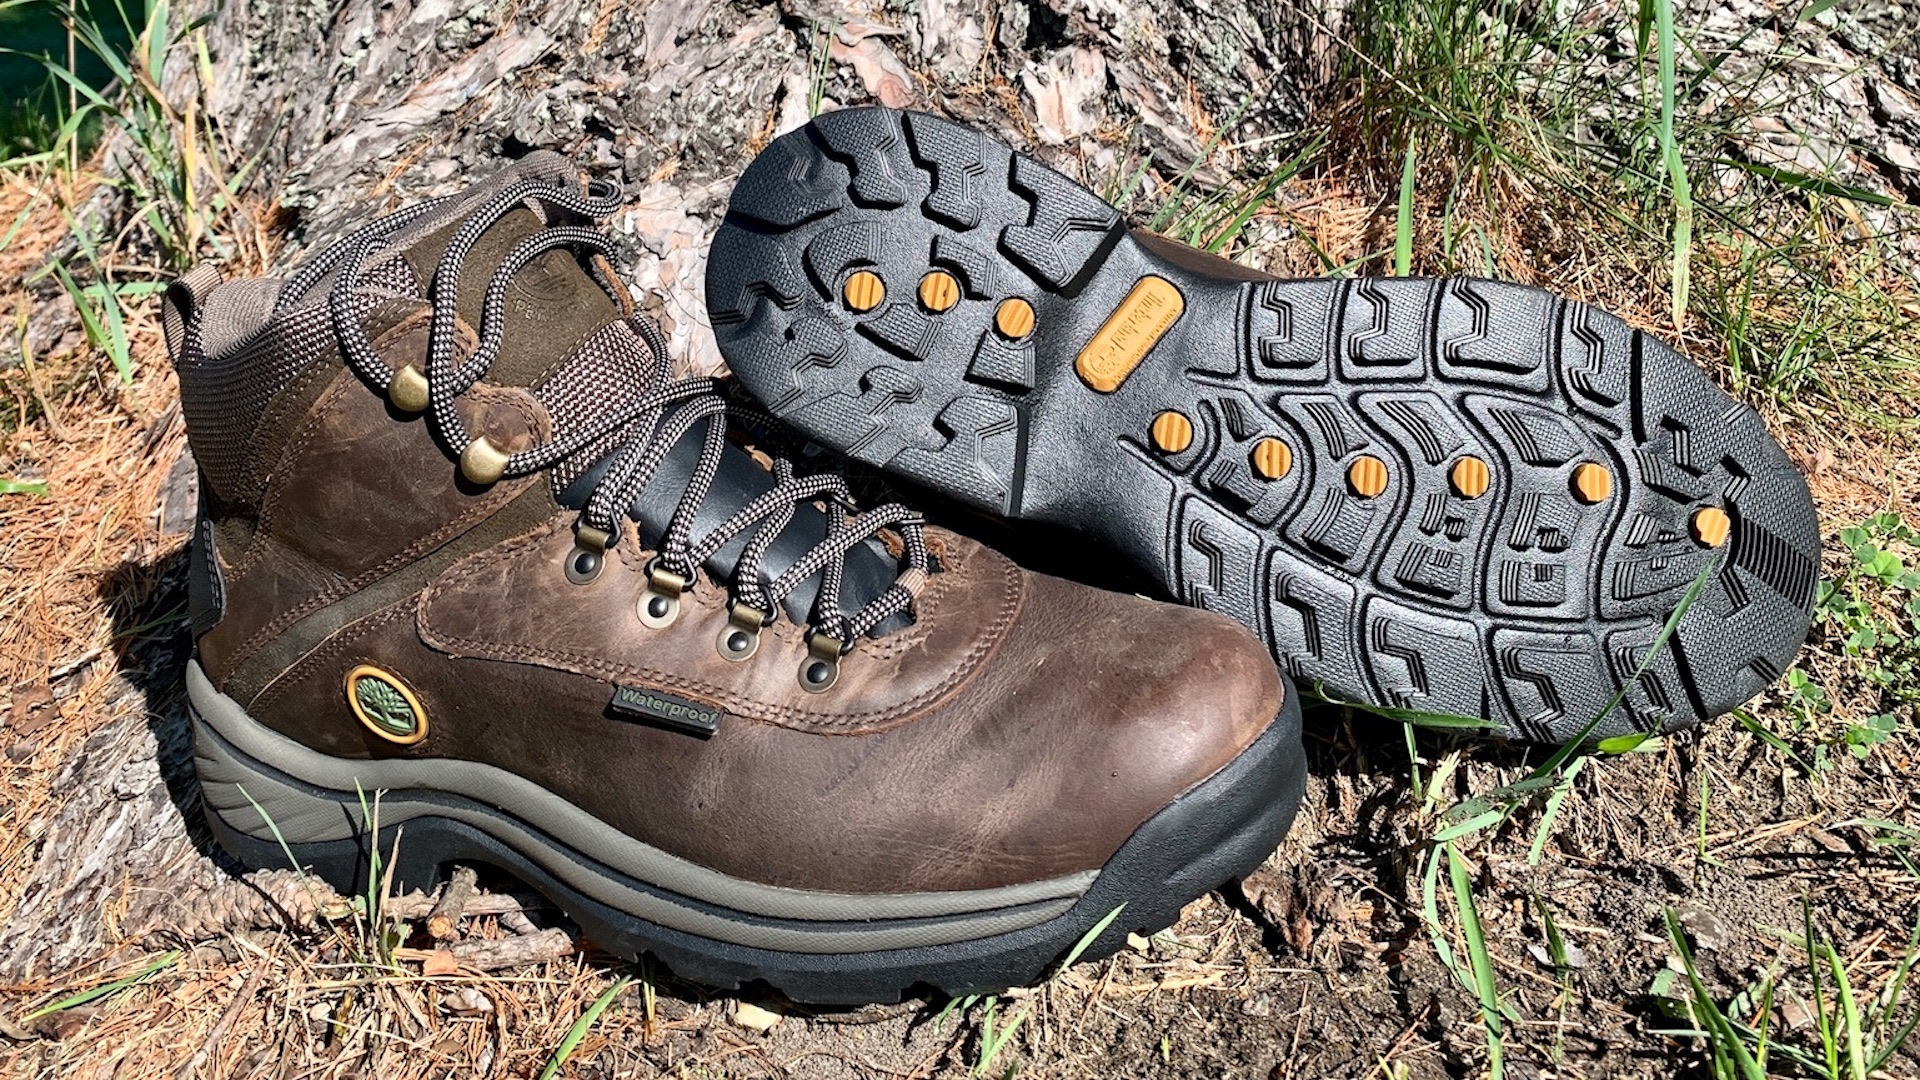 Timberland Mid Waterproof Hiking Boots (Review) 2021 - Task u0026 Purpose